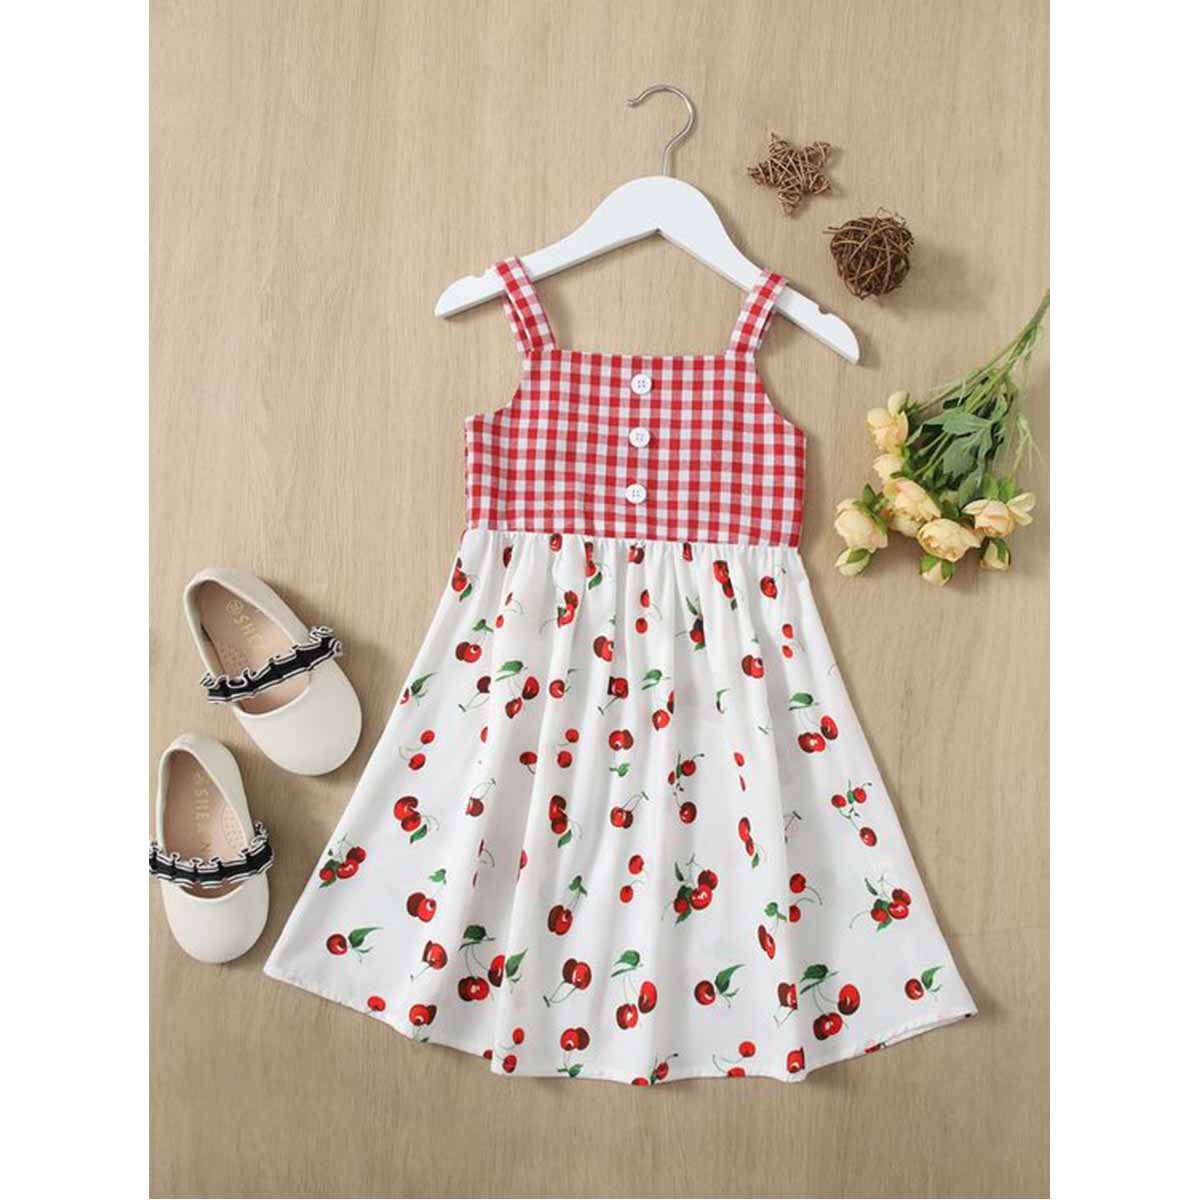 BabyGirl's Cotton Stylish Red Cherry Designer Frocks & Dresses for Kids.